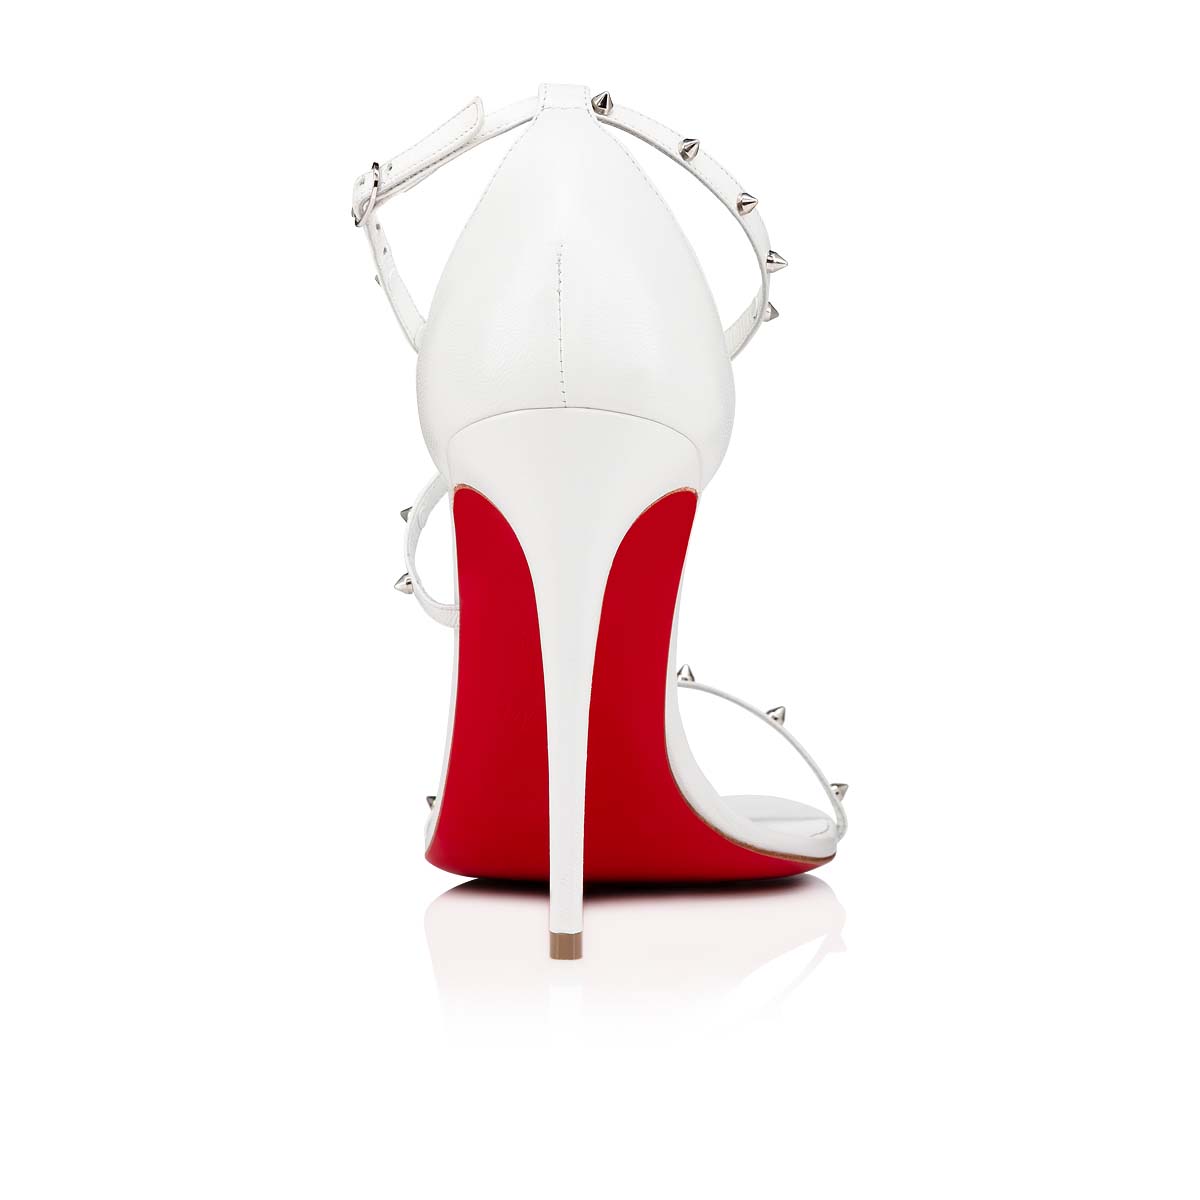 Riojana Spikes 100 White Leather - Shoes - Women - Christian Louboutin